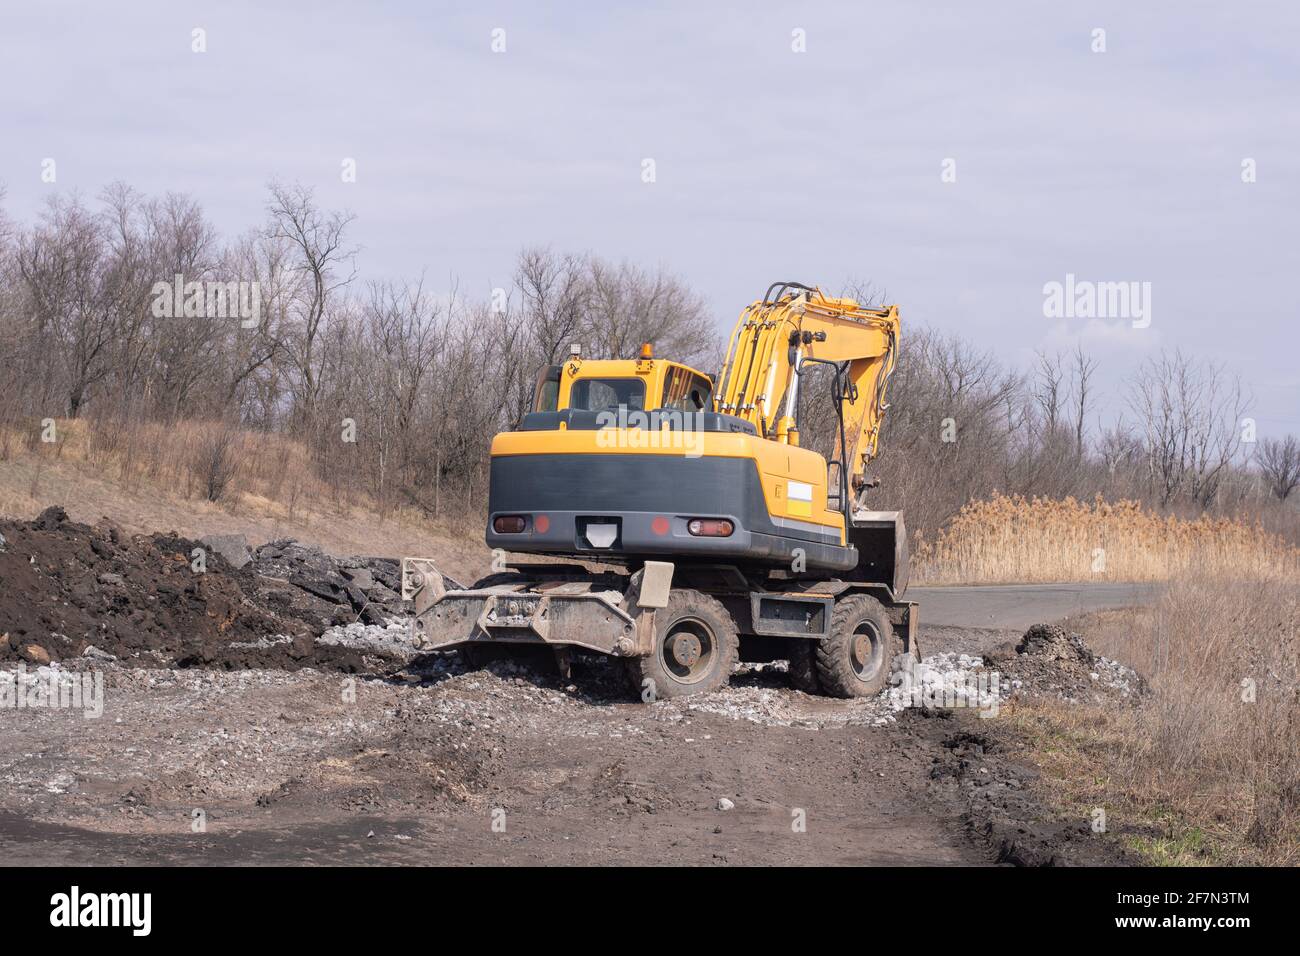 The yellow excavator works on road repairs.  Stock Photo